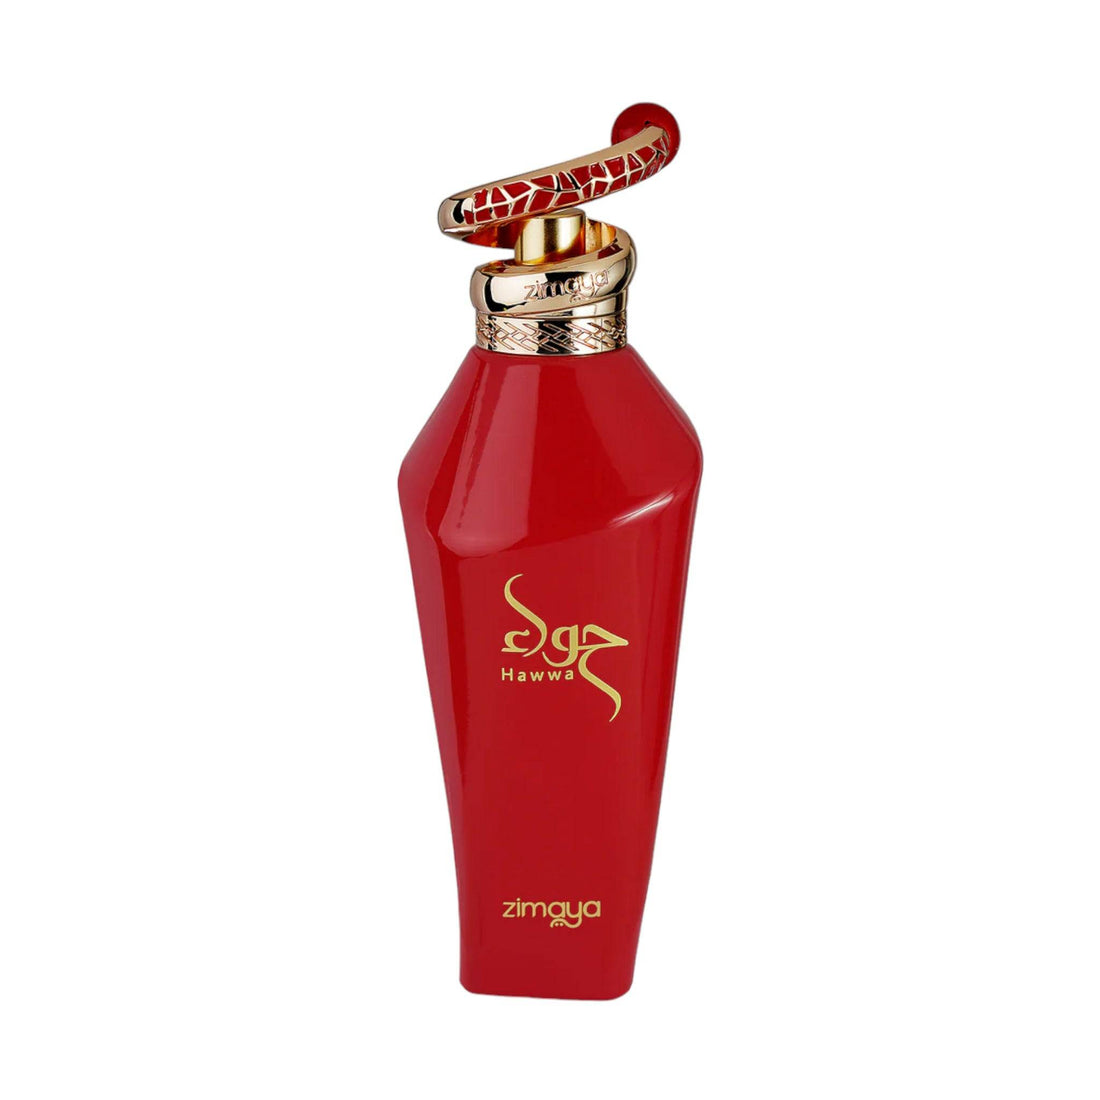 Striking 100ml bottle of Zimaya Hawwa Red Eau De Parfum, encapsulating its bold and charismatic fragrance.